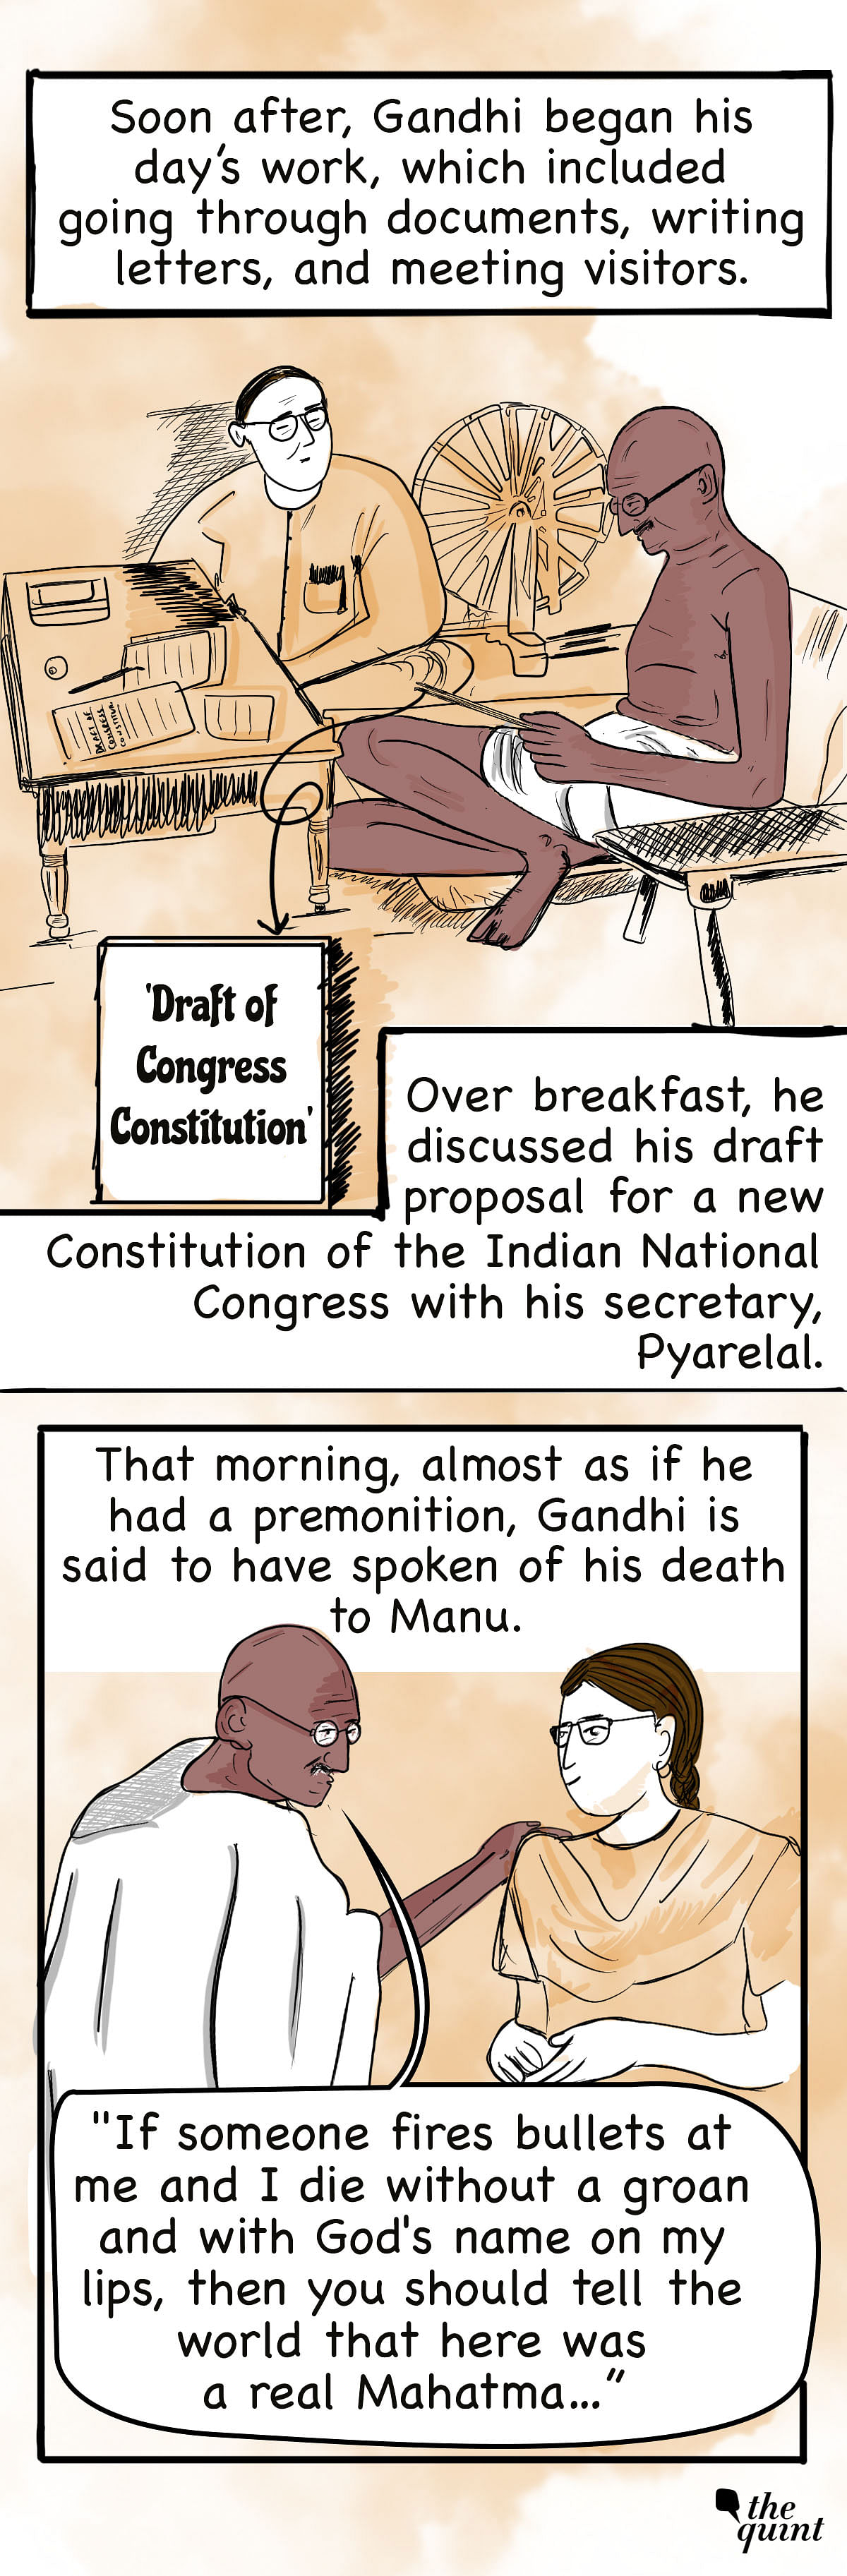 Meetings, Prayers, Forebodings: Reliving Mahatma Gandhi’s Last Day